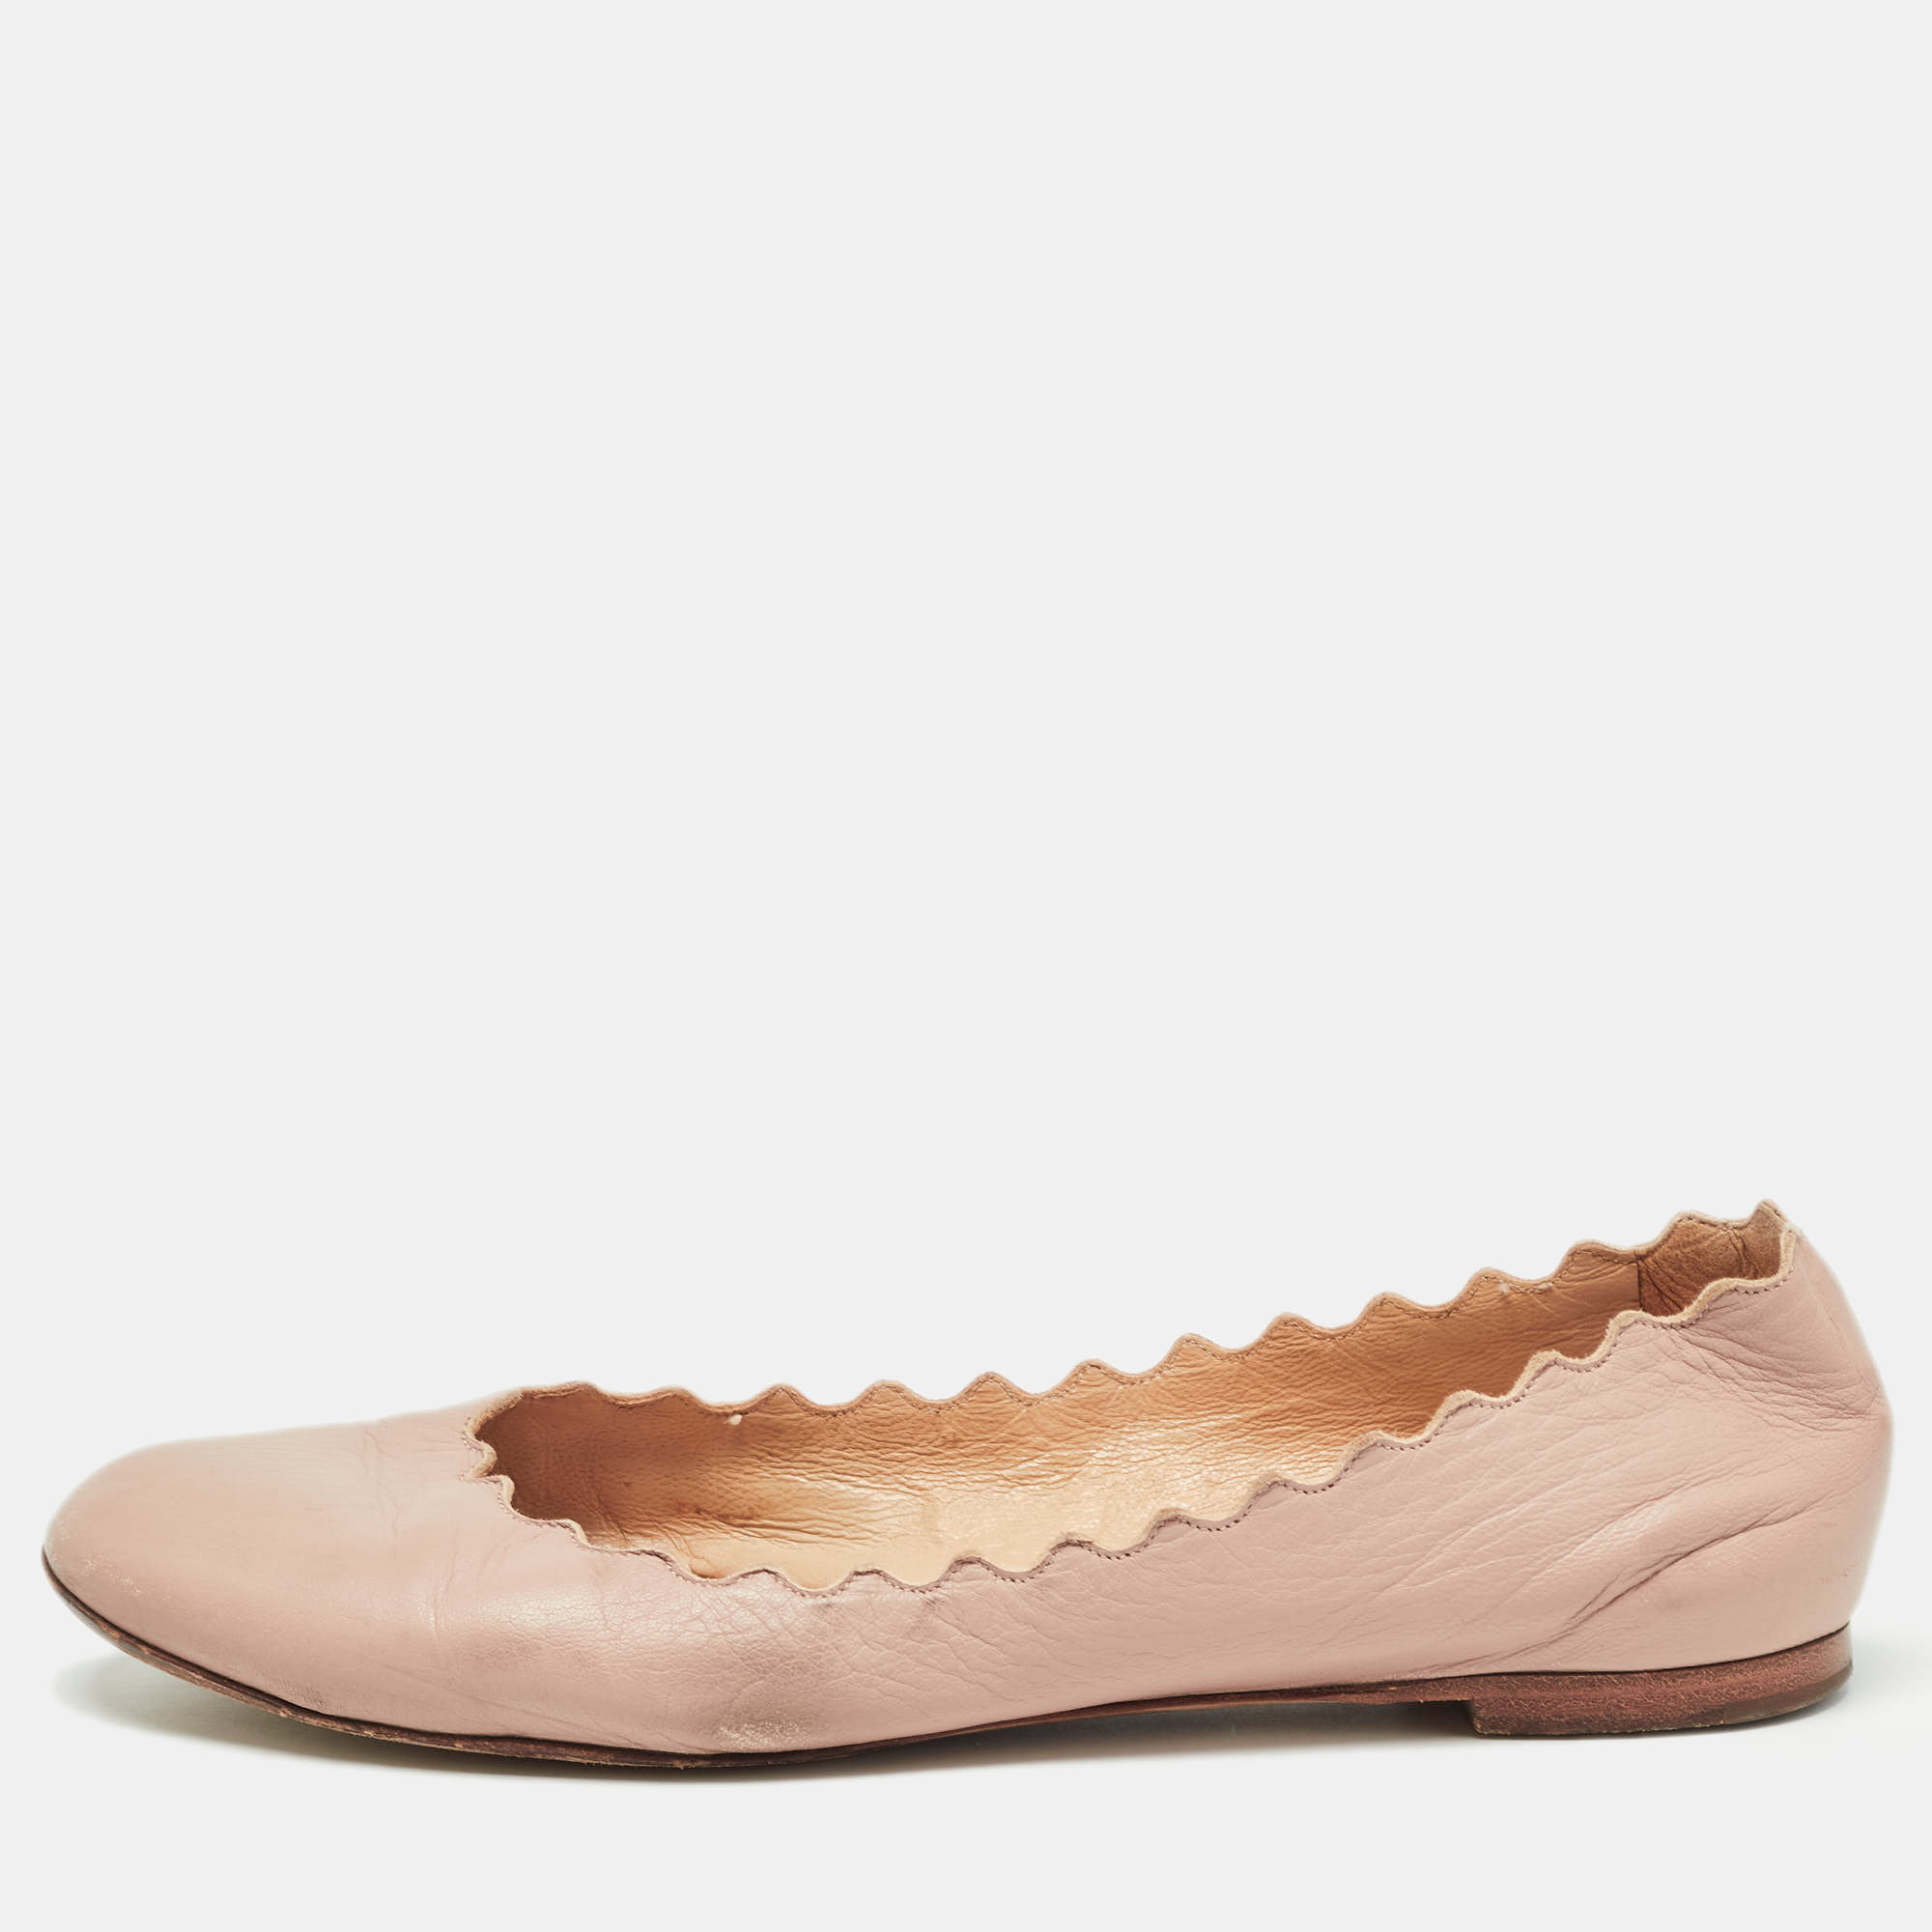 Chloe pink scalloped leather lauren ballet flats size 37.5